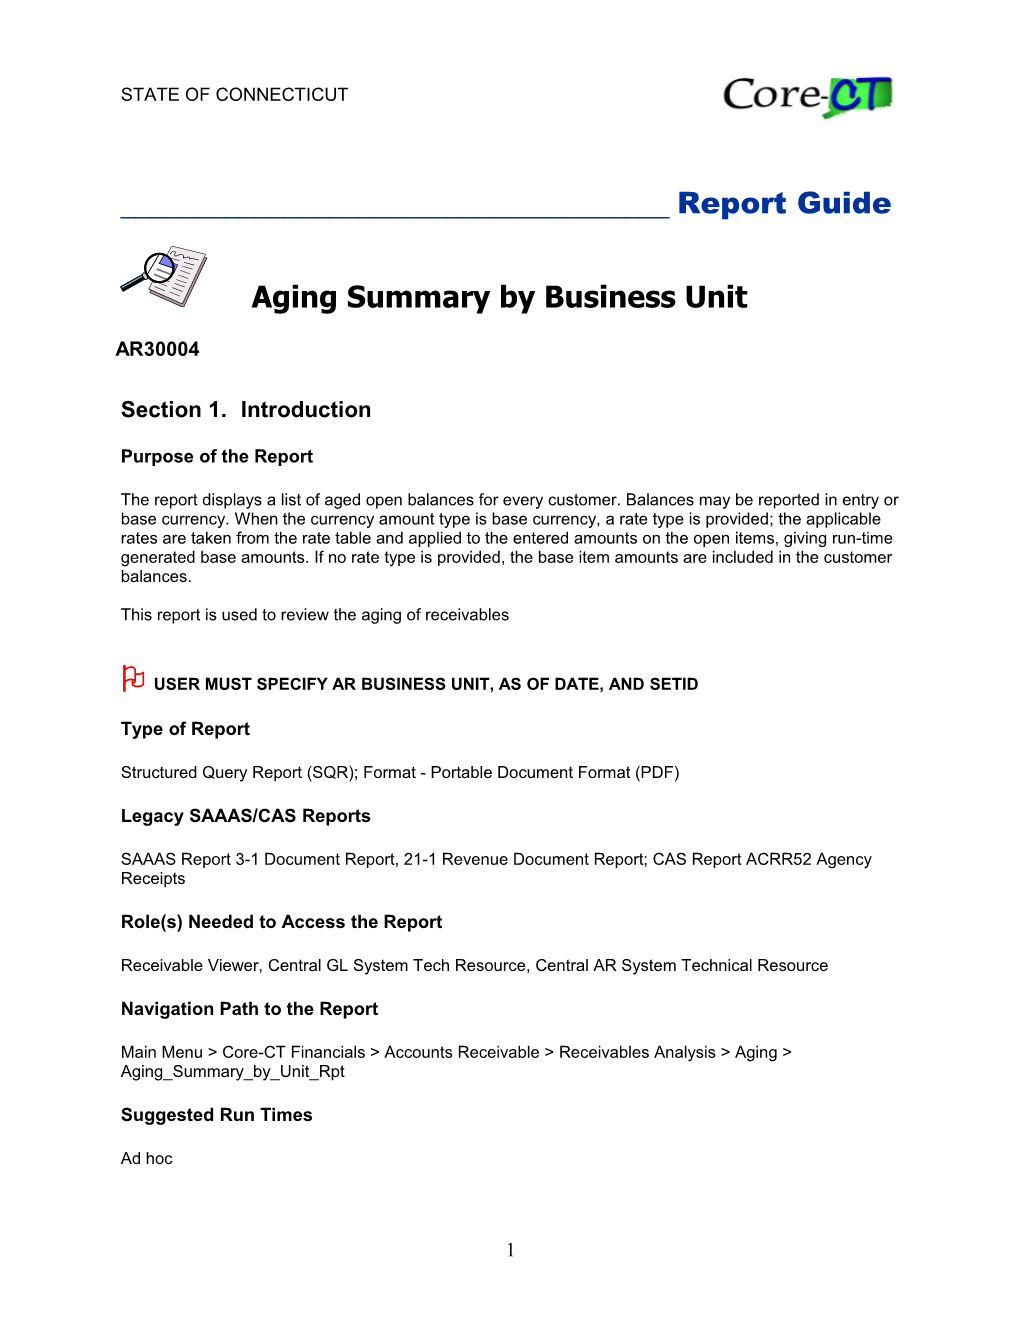 Aging Summary by Business Unit (AR30004)